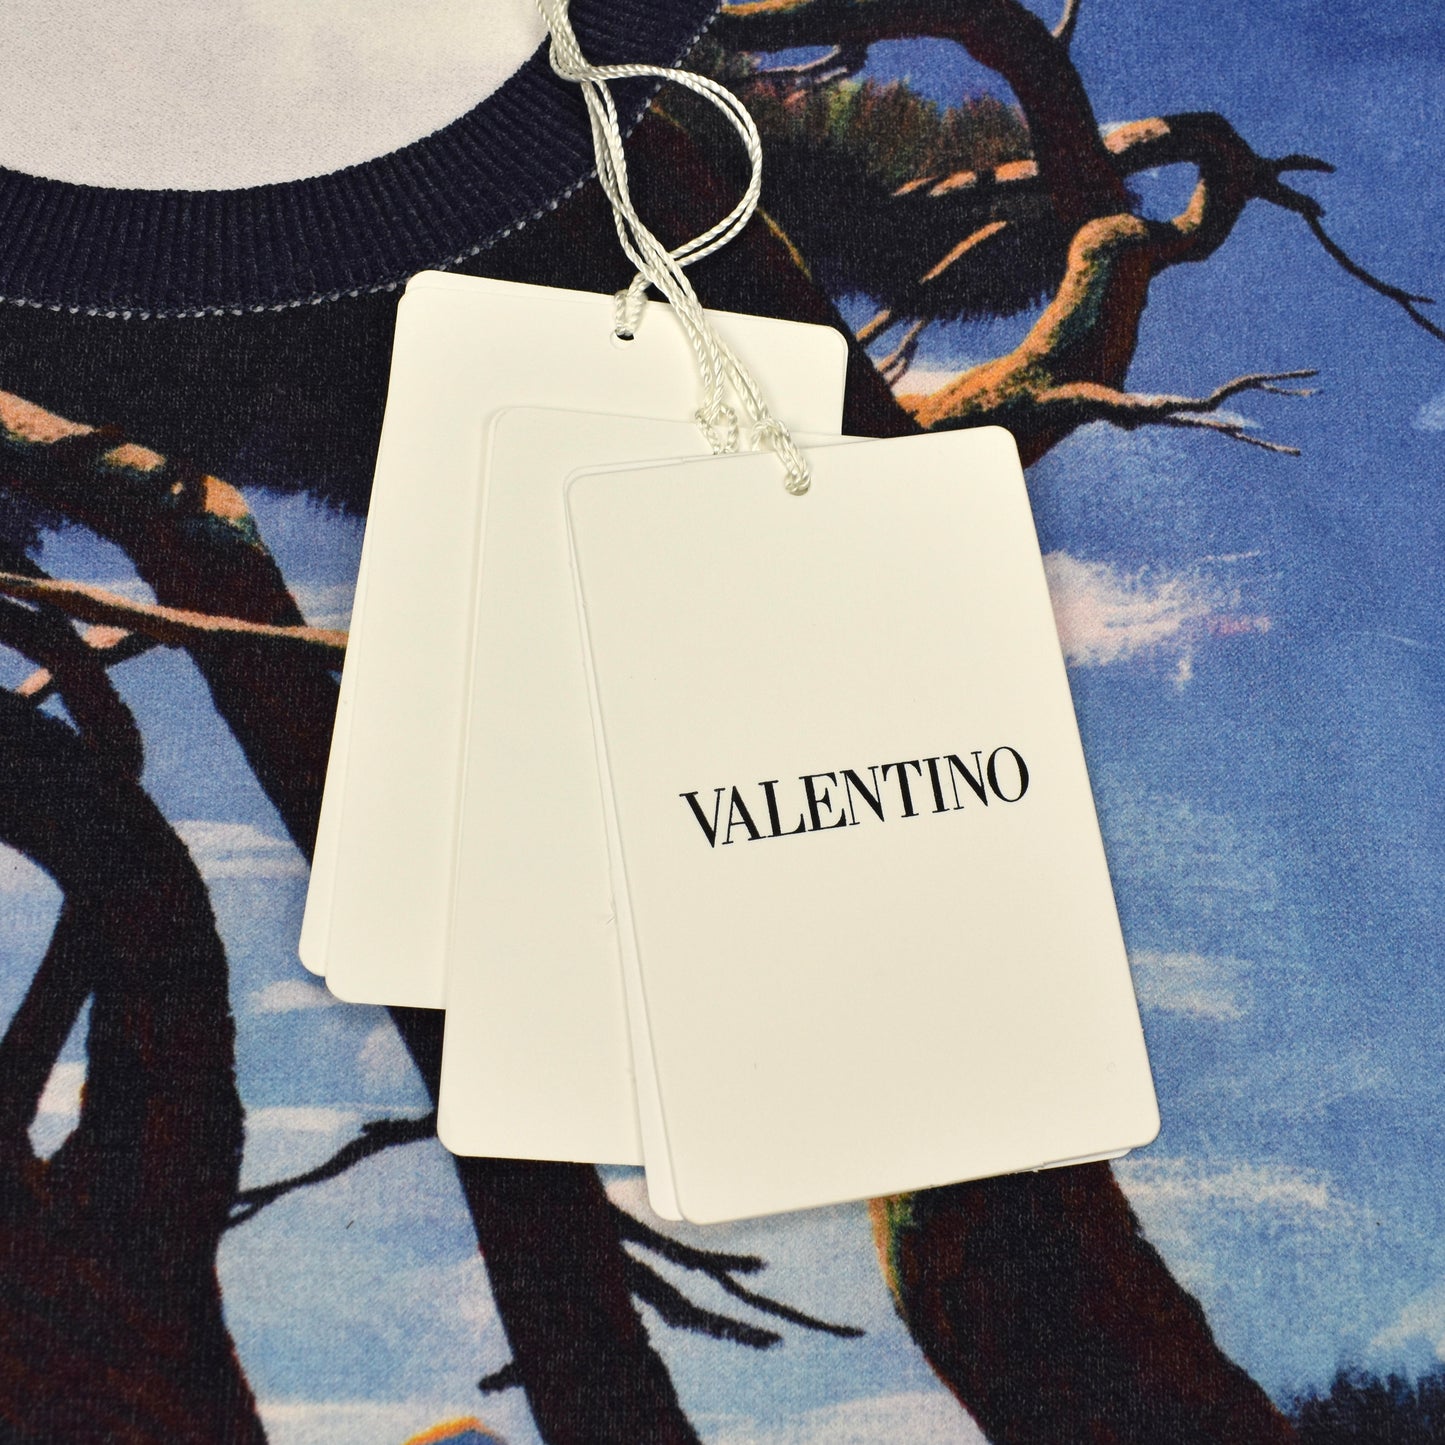 Valentino - Floating Islands Surrealist Print Viscose Sweater